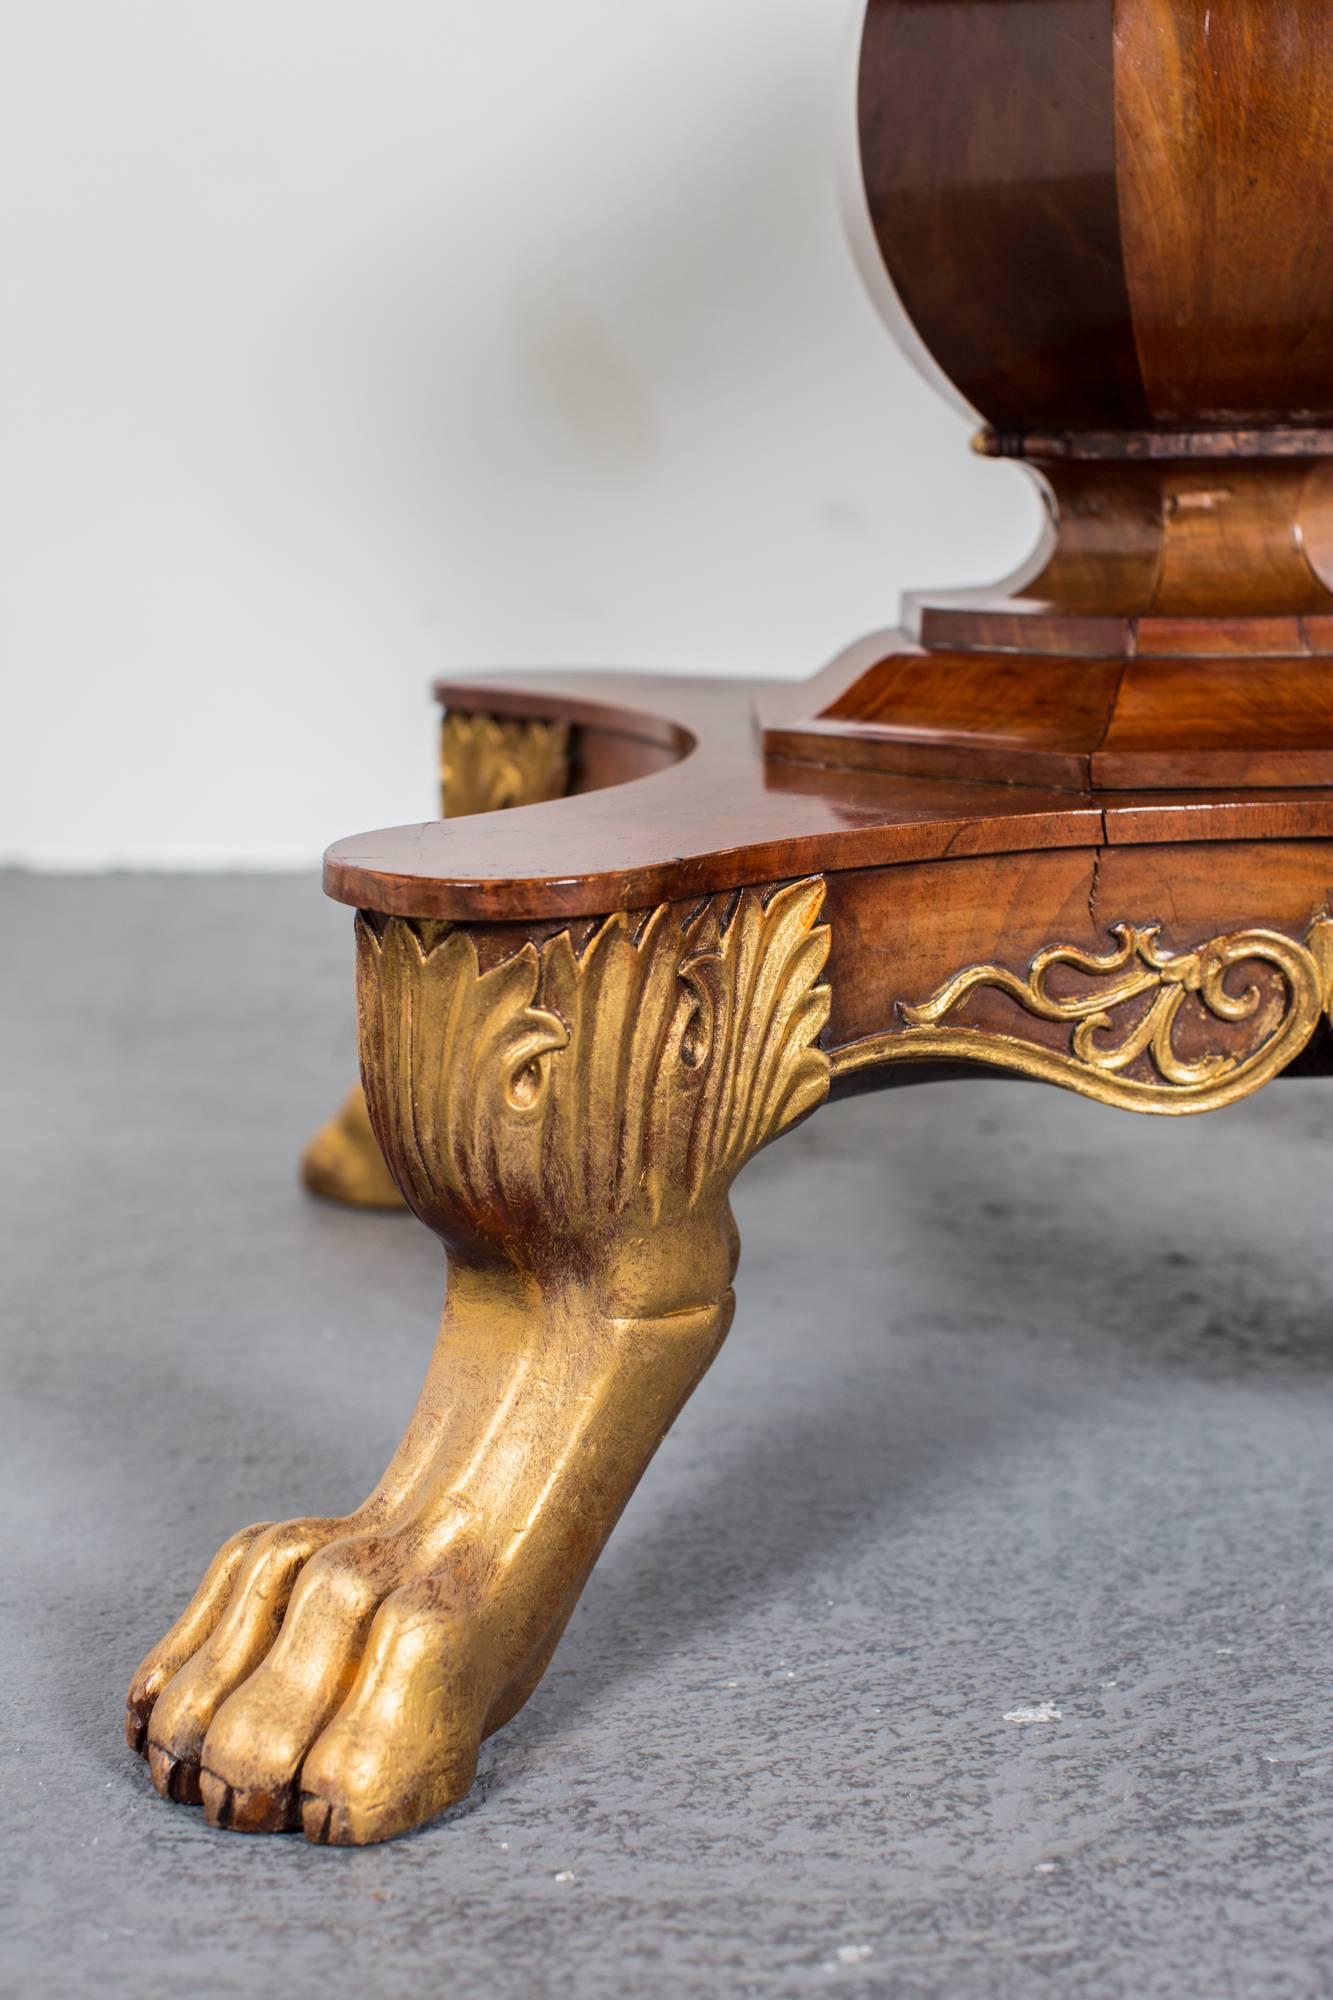 Centre Table Walnut Gilded Details English 19th century Regency England 2